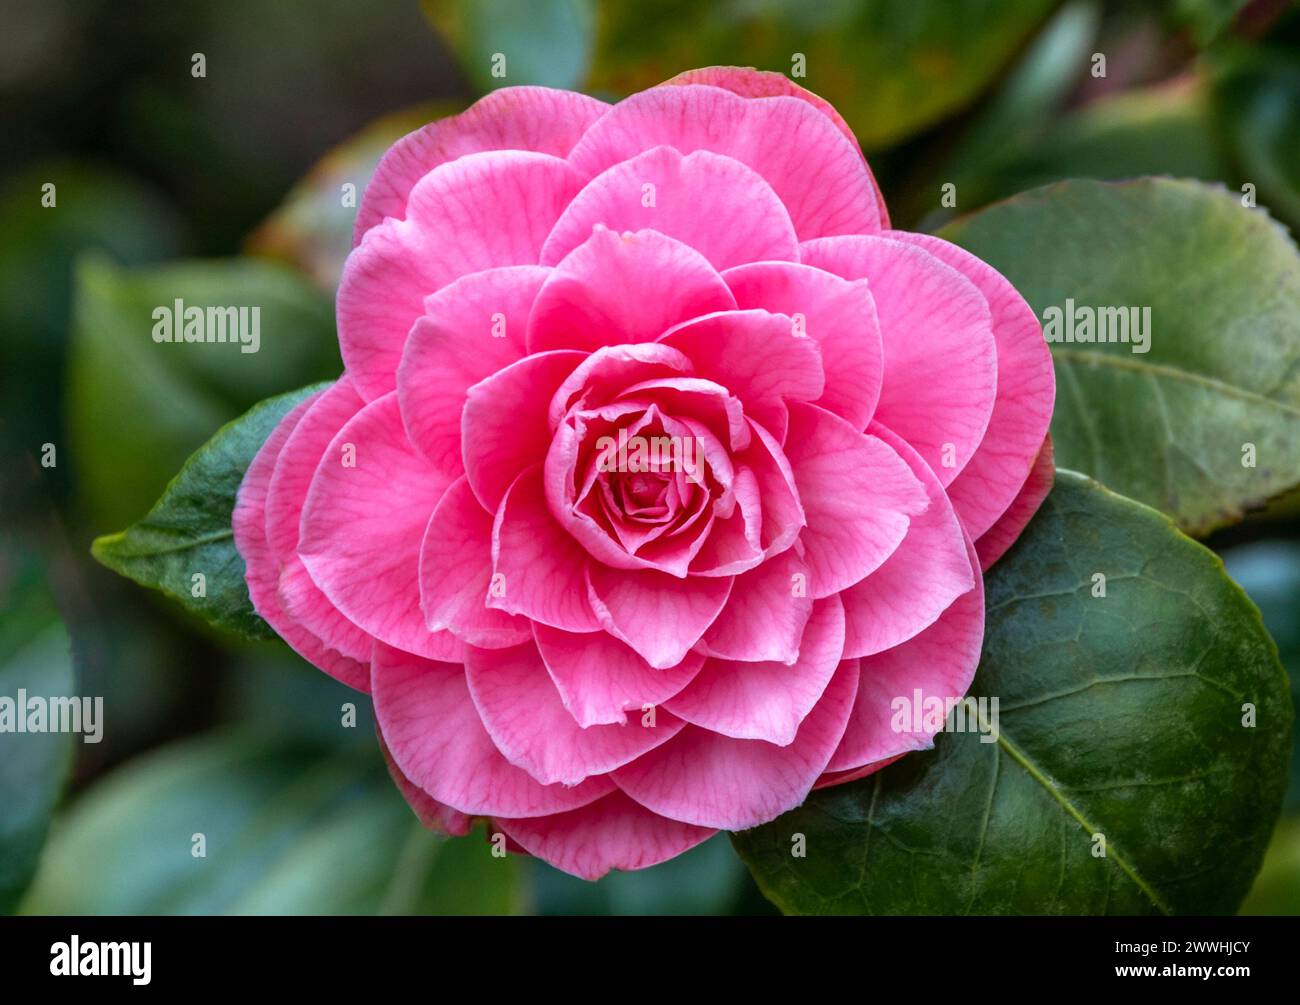 A pink azalea flower showing a rosette of petals Stock Photo